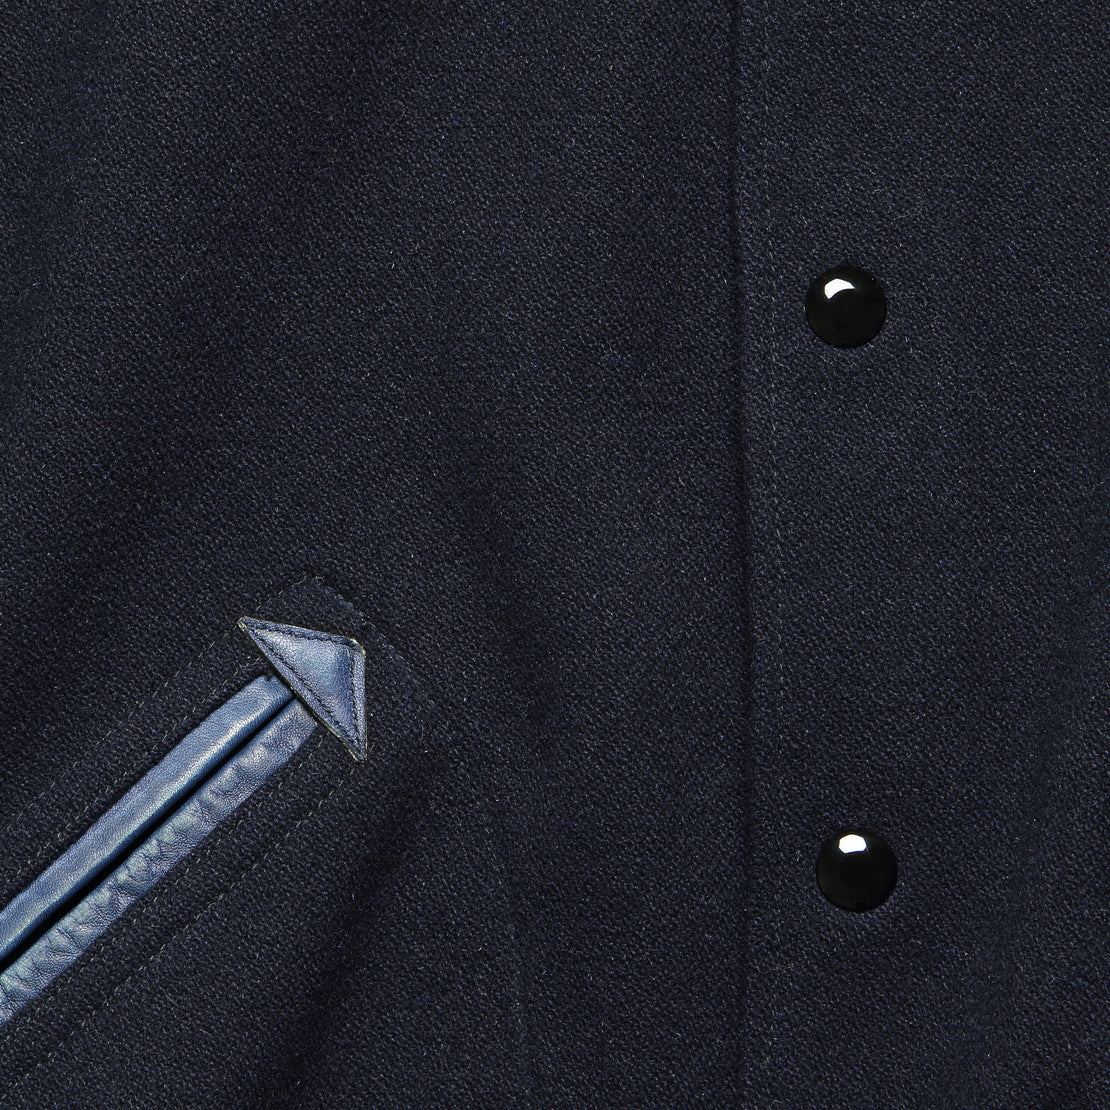 Leather / Wool Watson Jacket - Navy/Indigo - RRL - STAG Provisions - Outerwear - Coat / Jacket